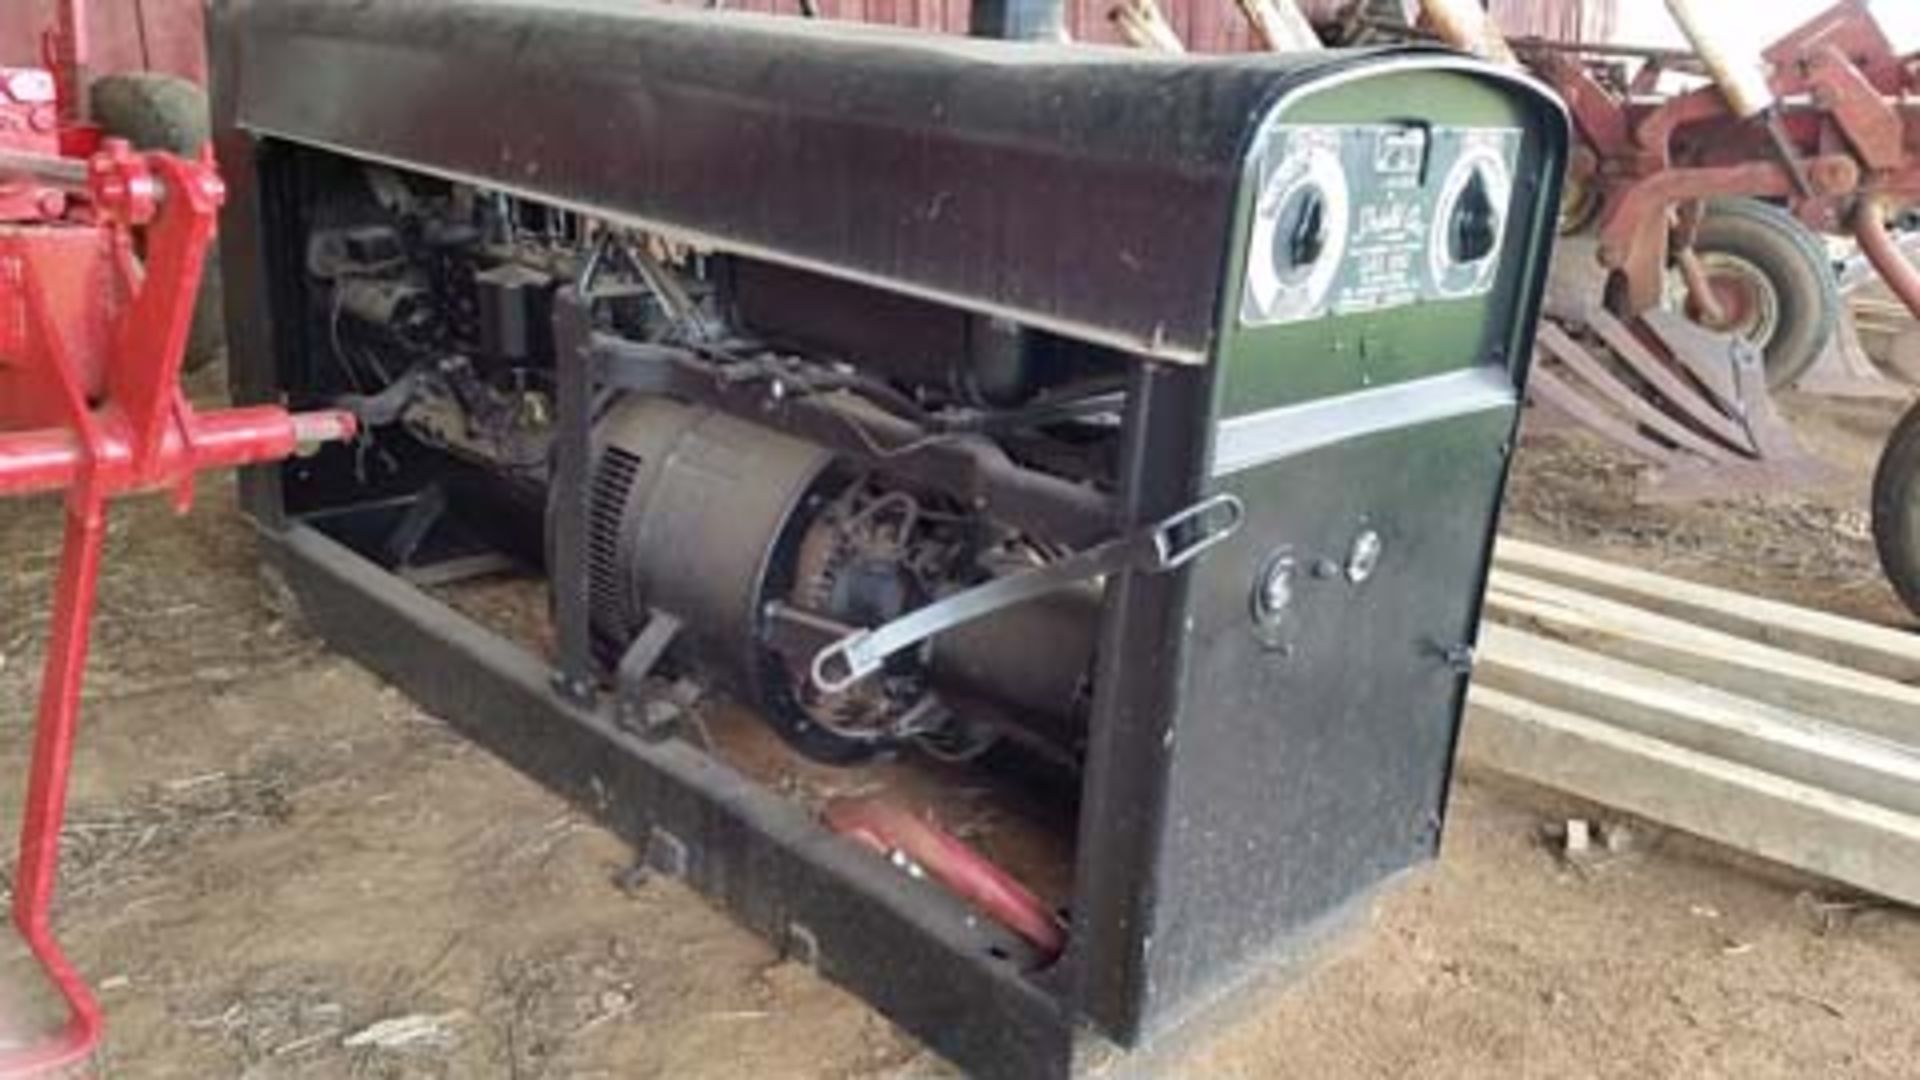 Lincoln Shield Arc 300 Welder/Generator, Gas Engine (needs work) - Image 2 of 2